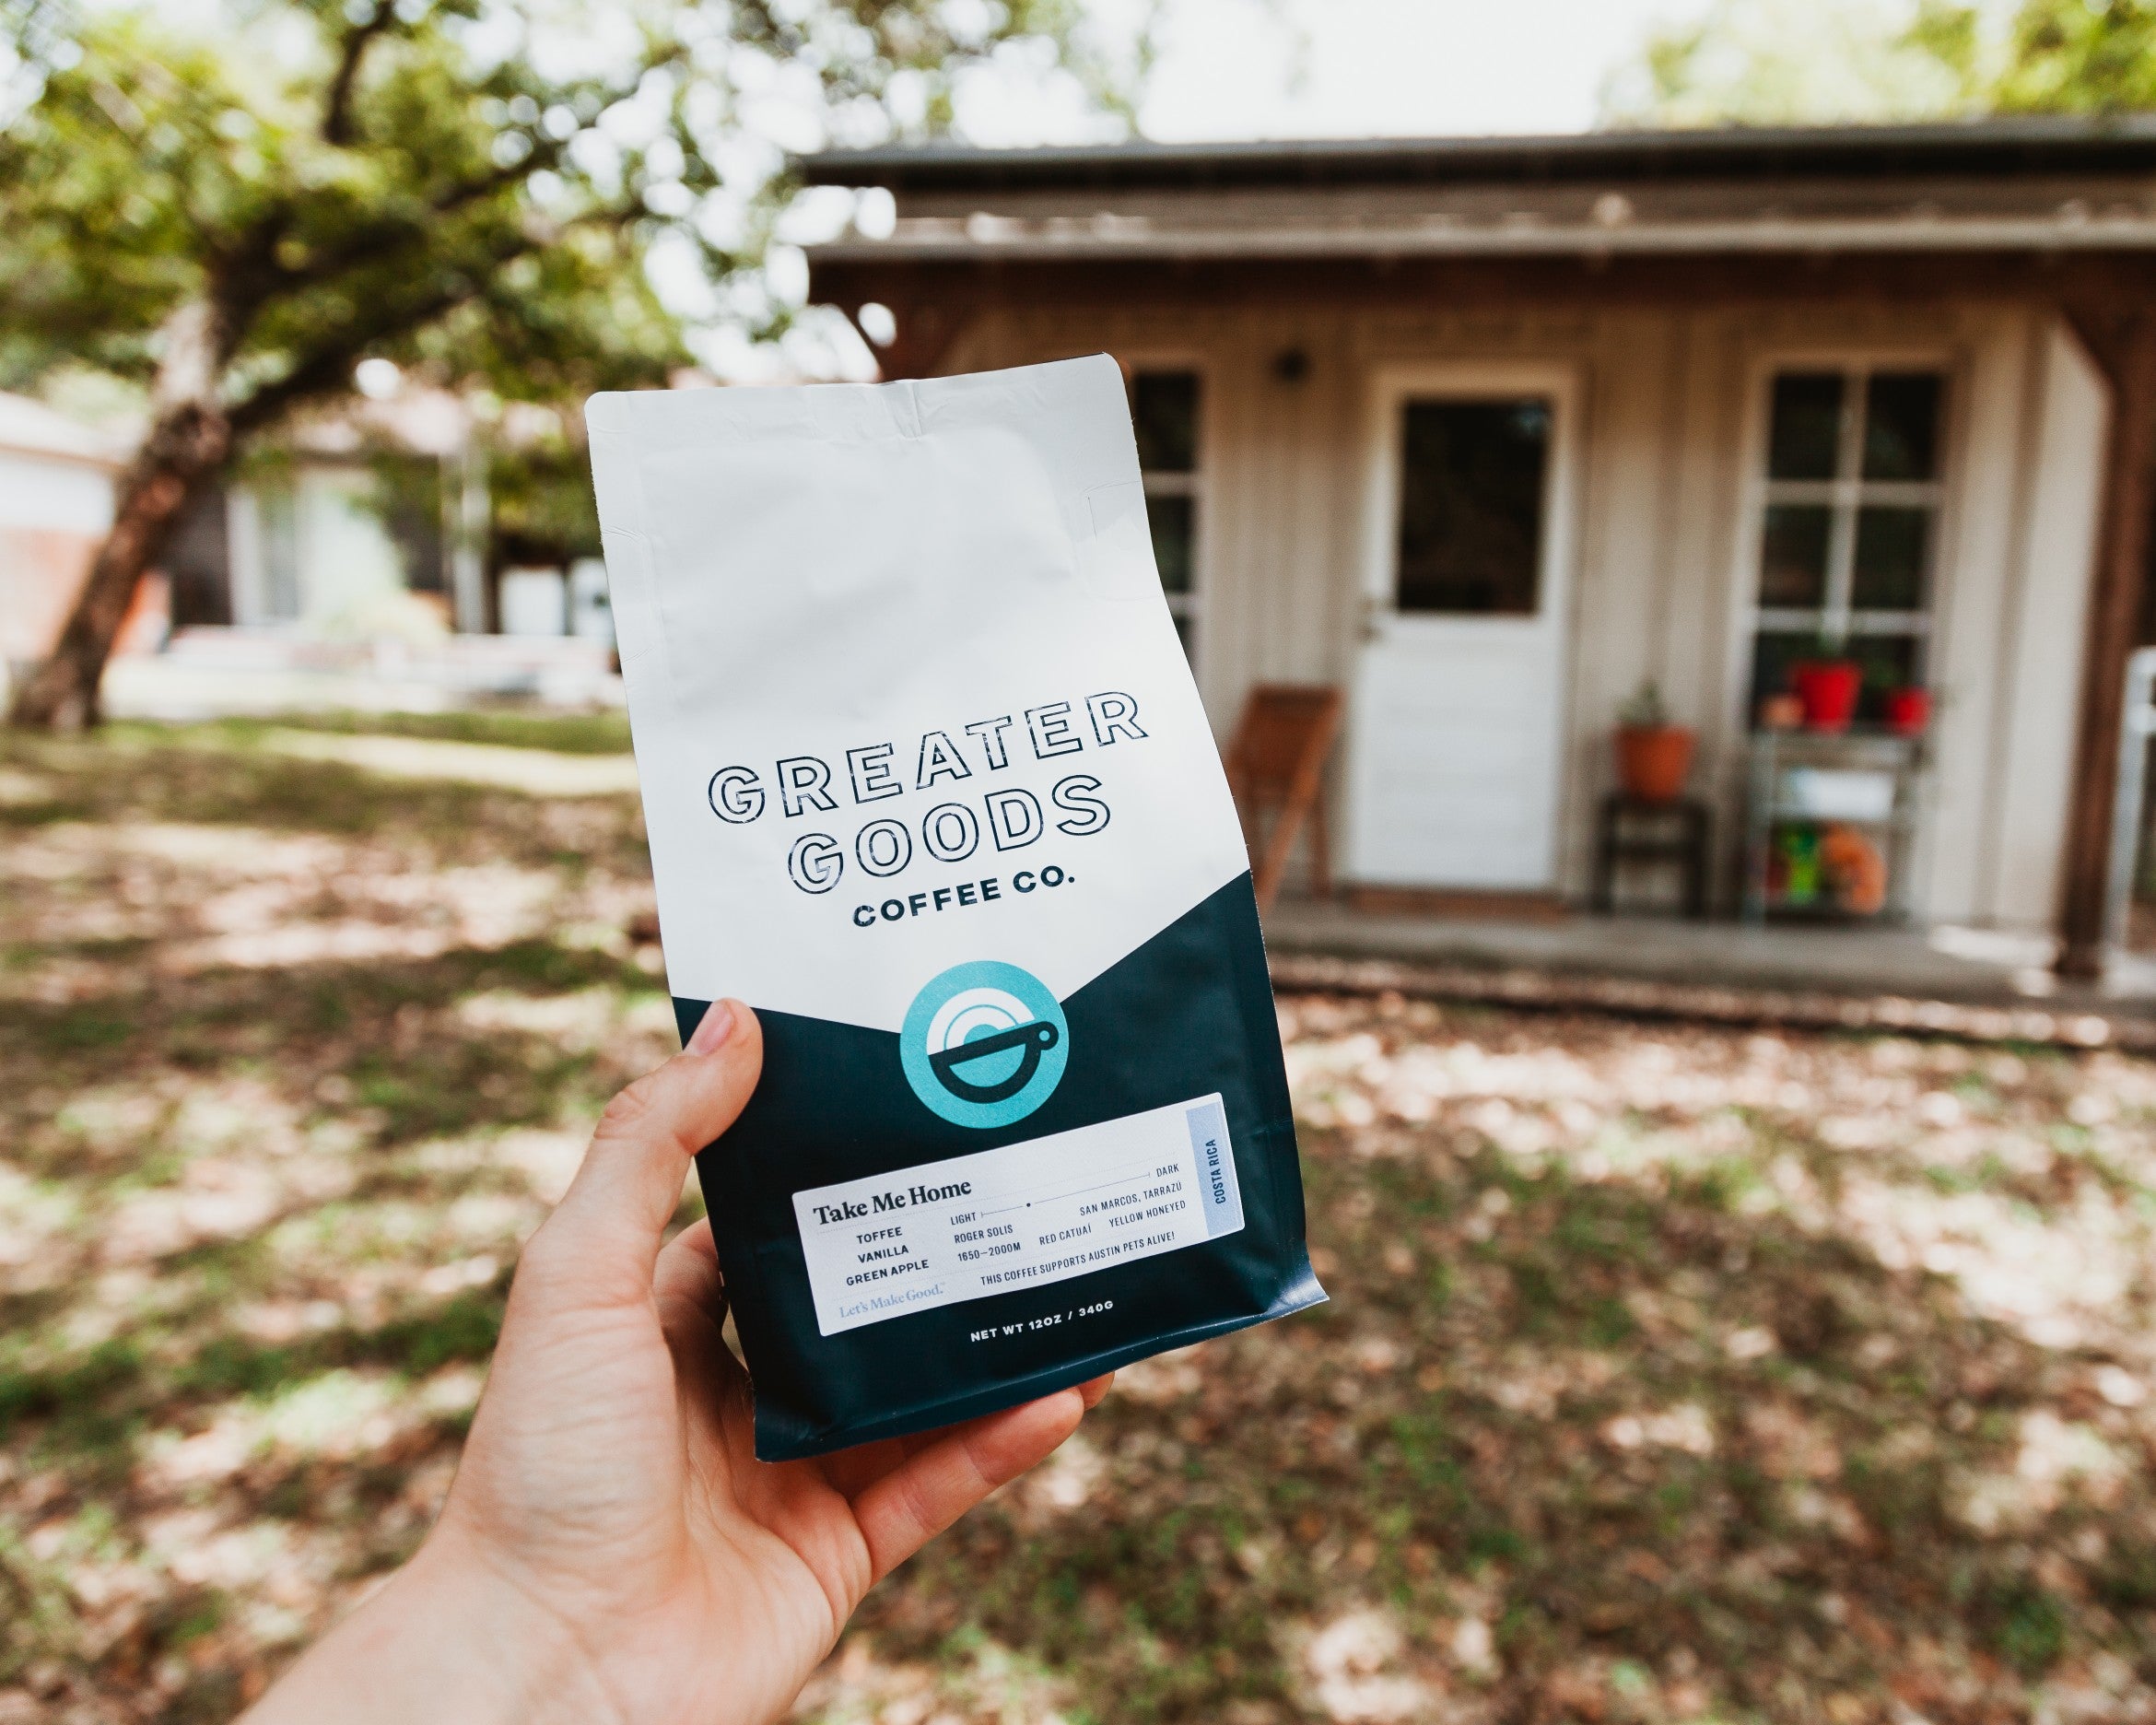 Take Me Home - Costa Rica  Single-Origin Specialty Coffee – Greater Goods  Roasting